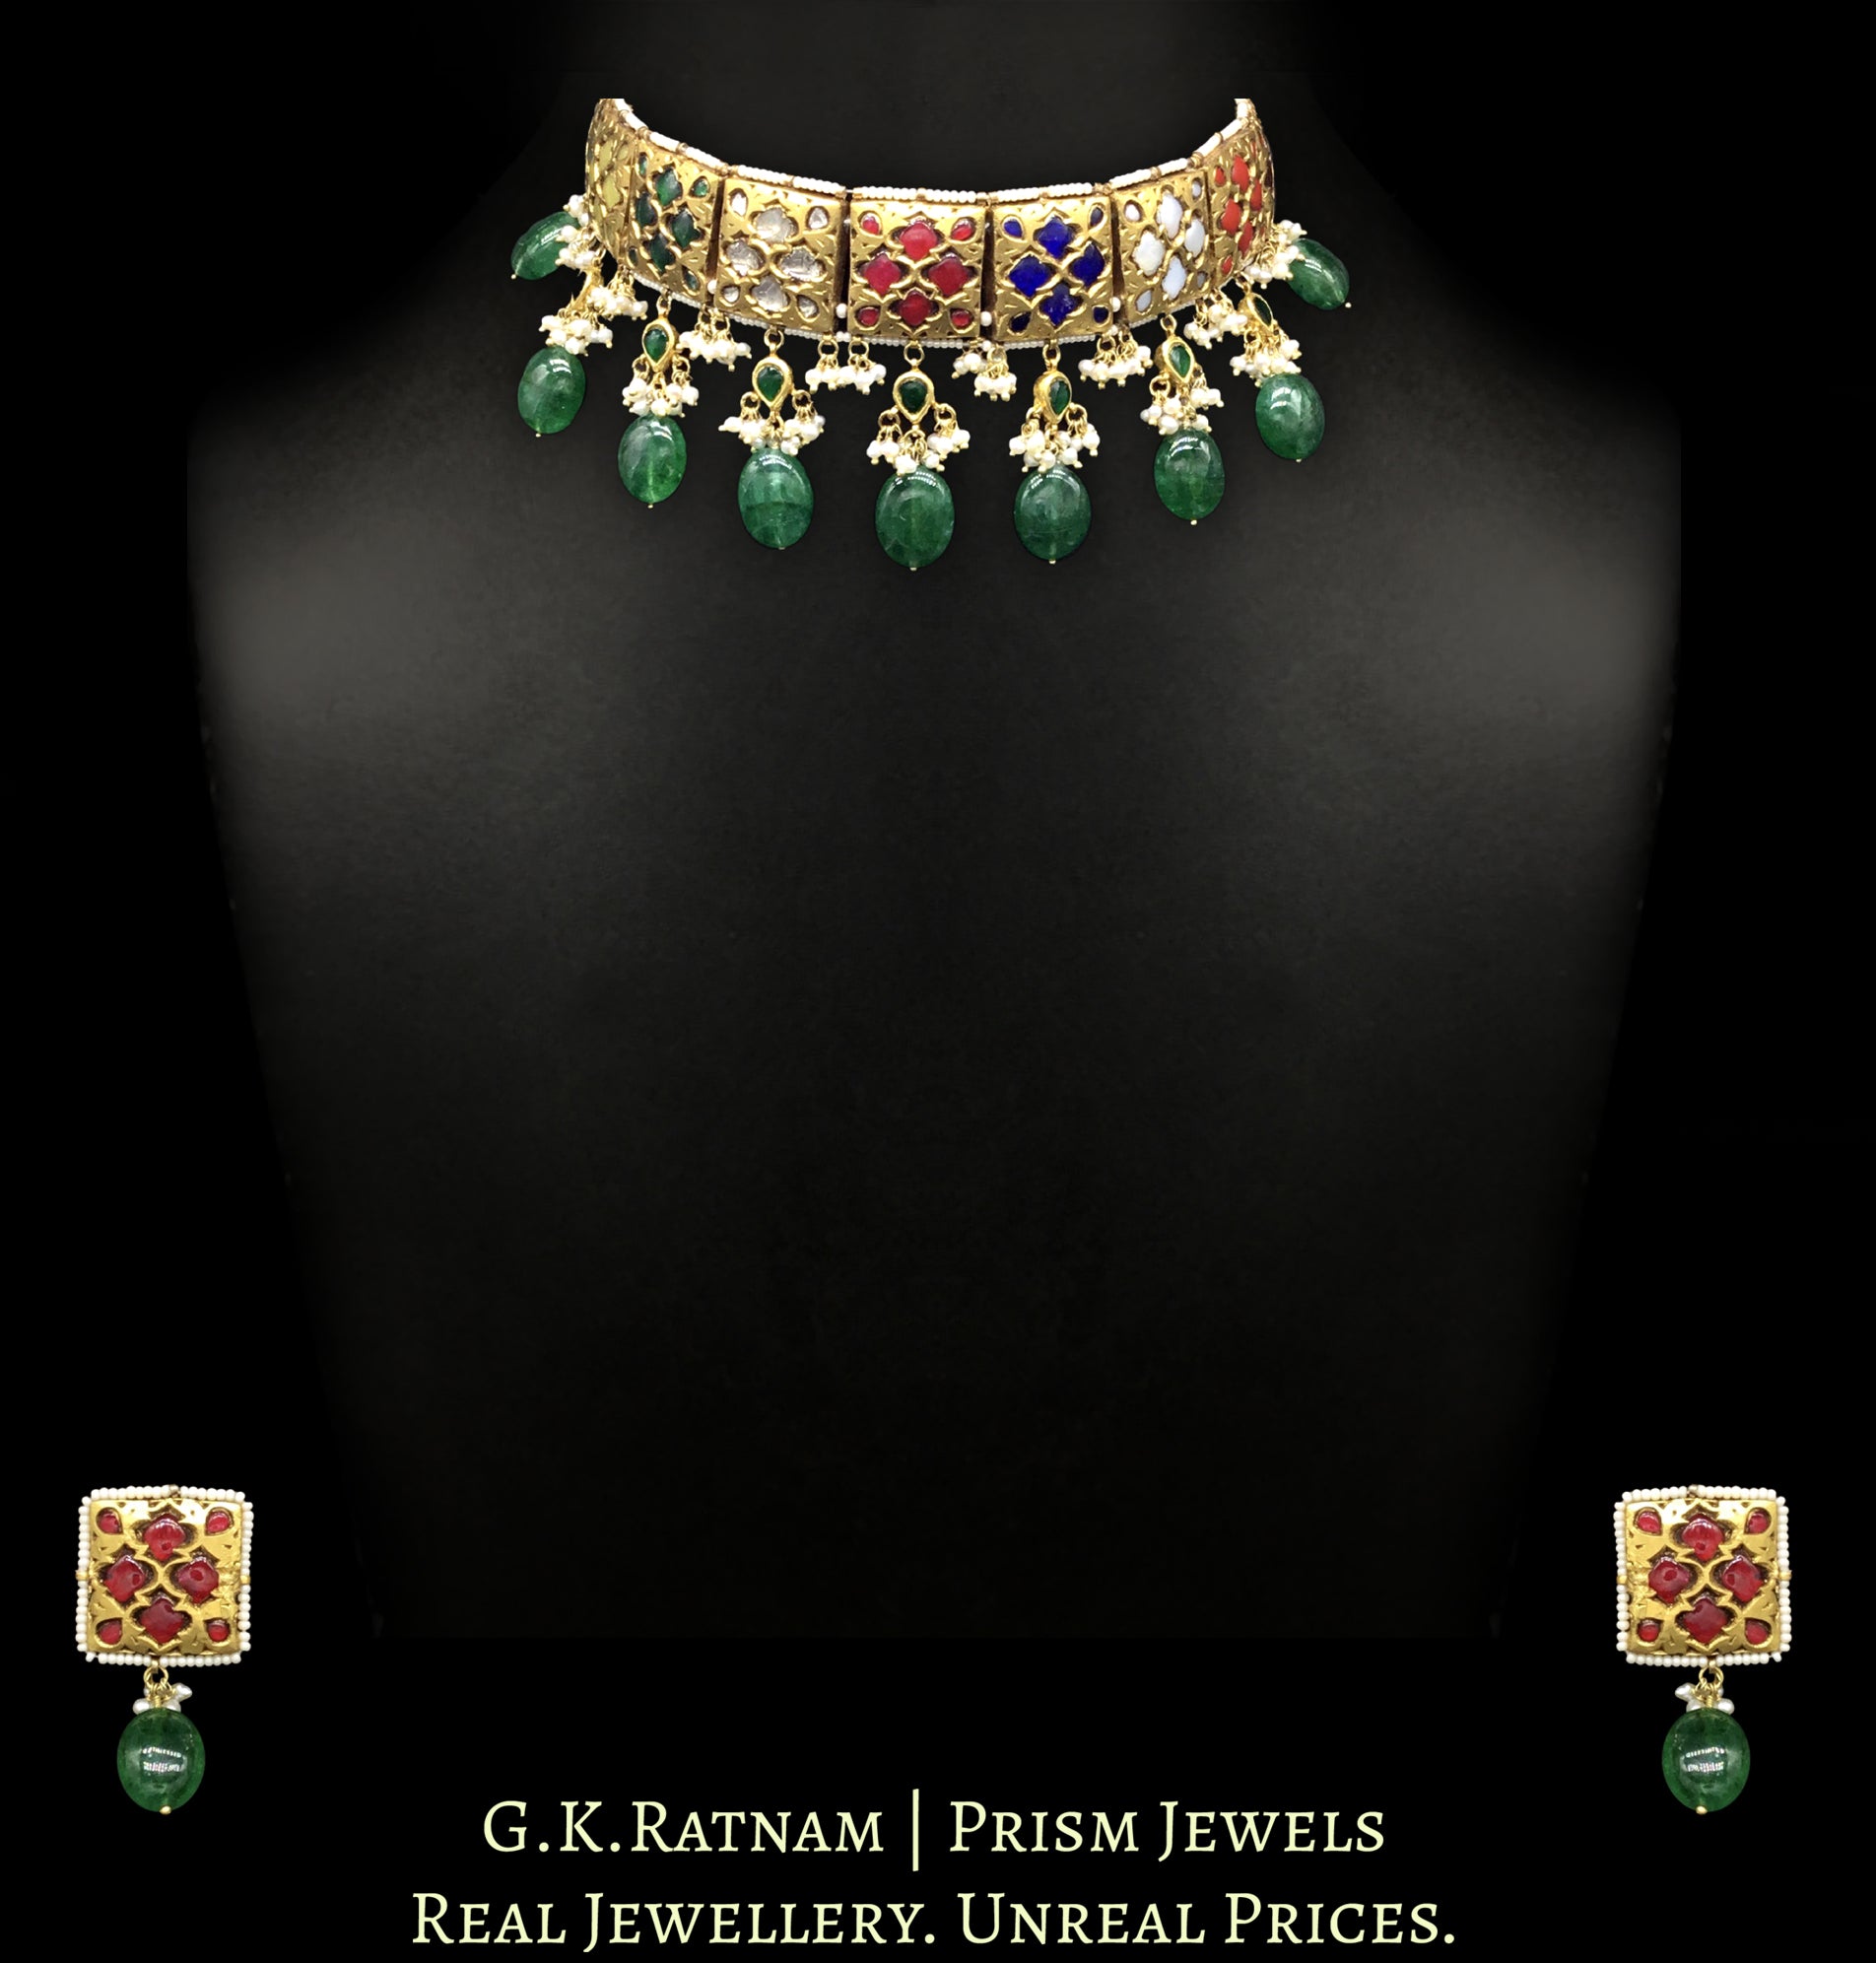 23k Gold and Diamond Polki Navratna Choker Necklace Set with Natural Freshwater Pearls and Green Beryls